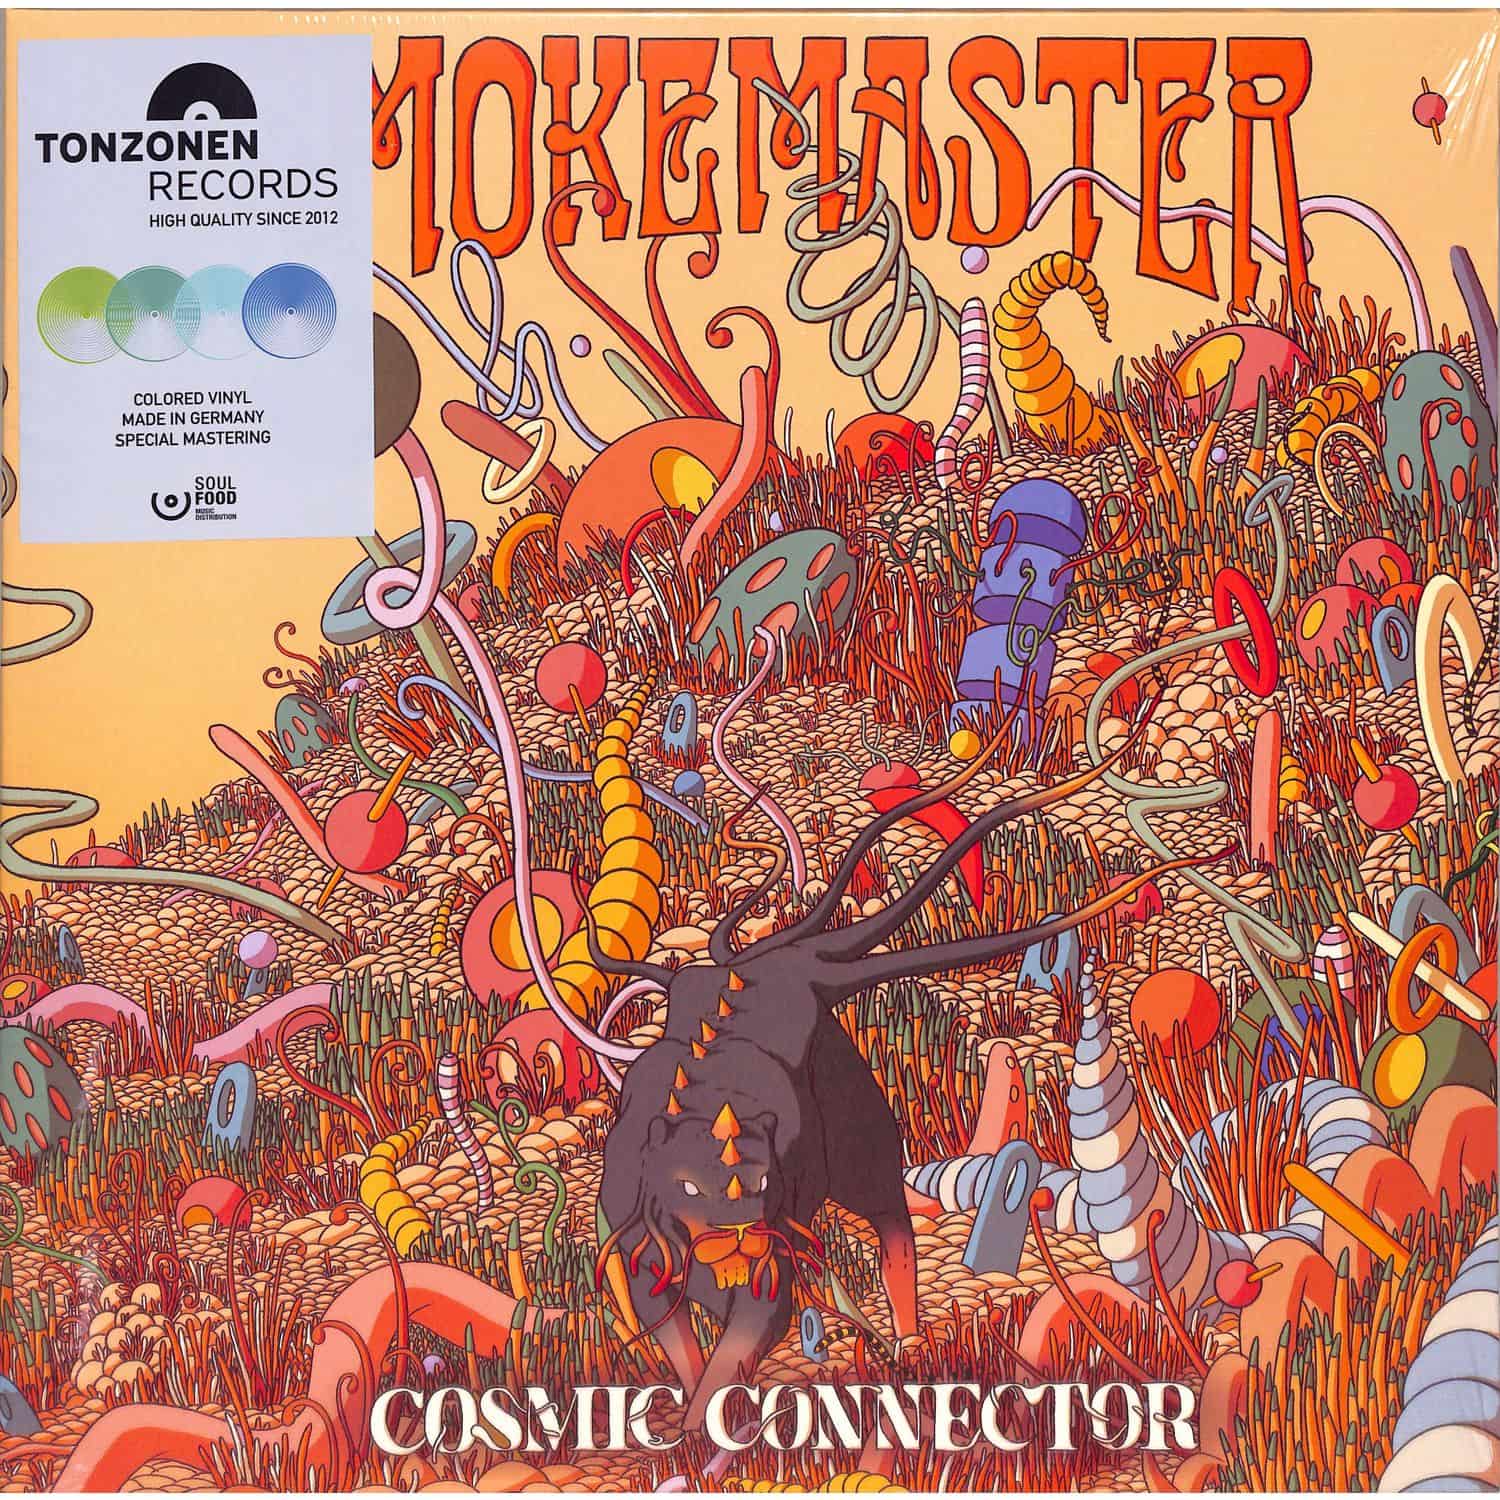 Smokemaster - COSMIC CONNECTOR 